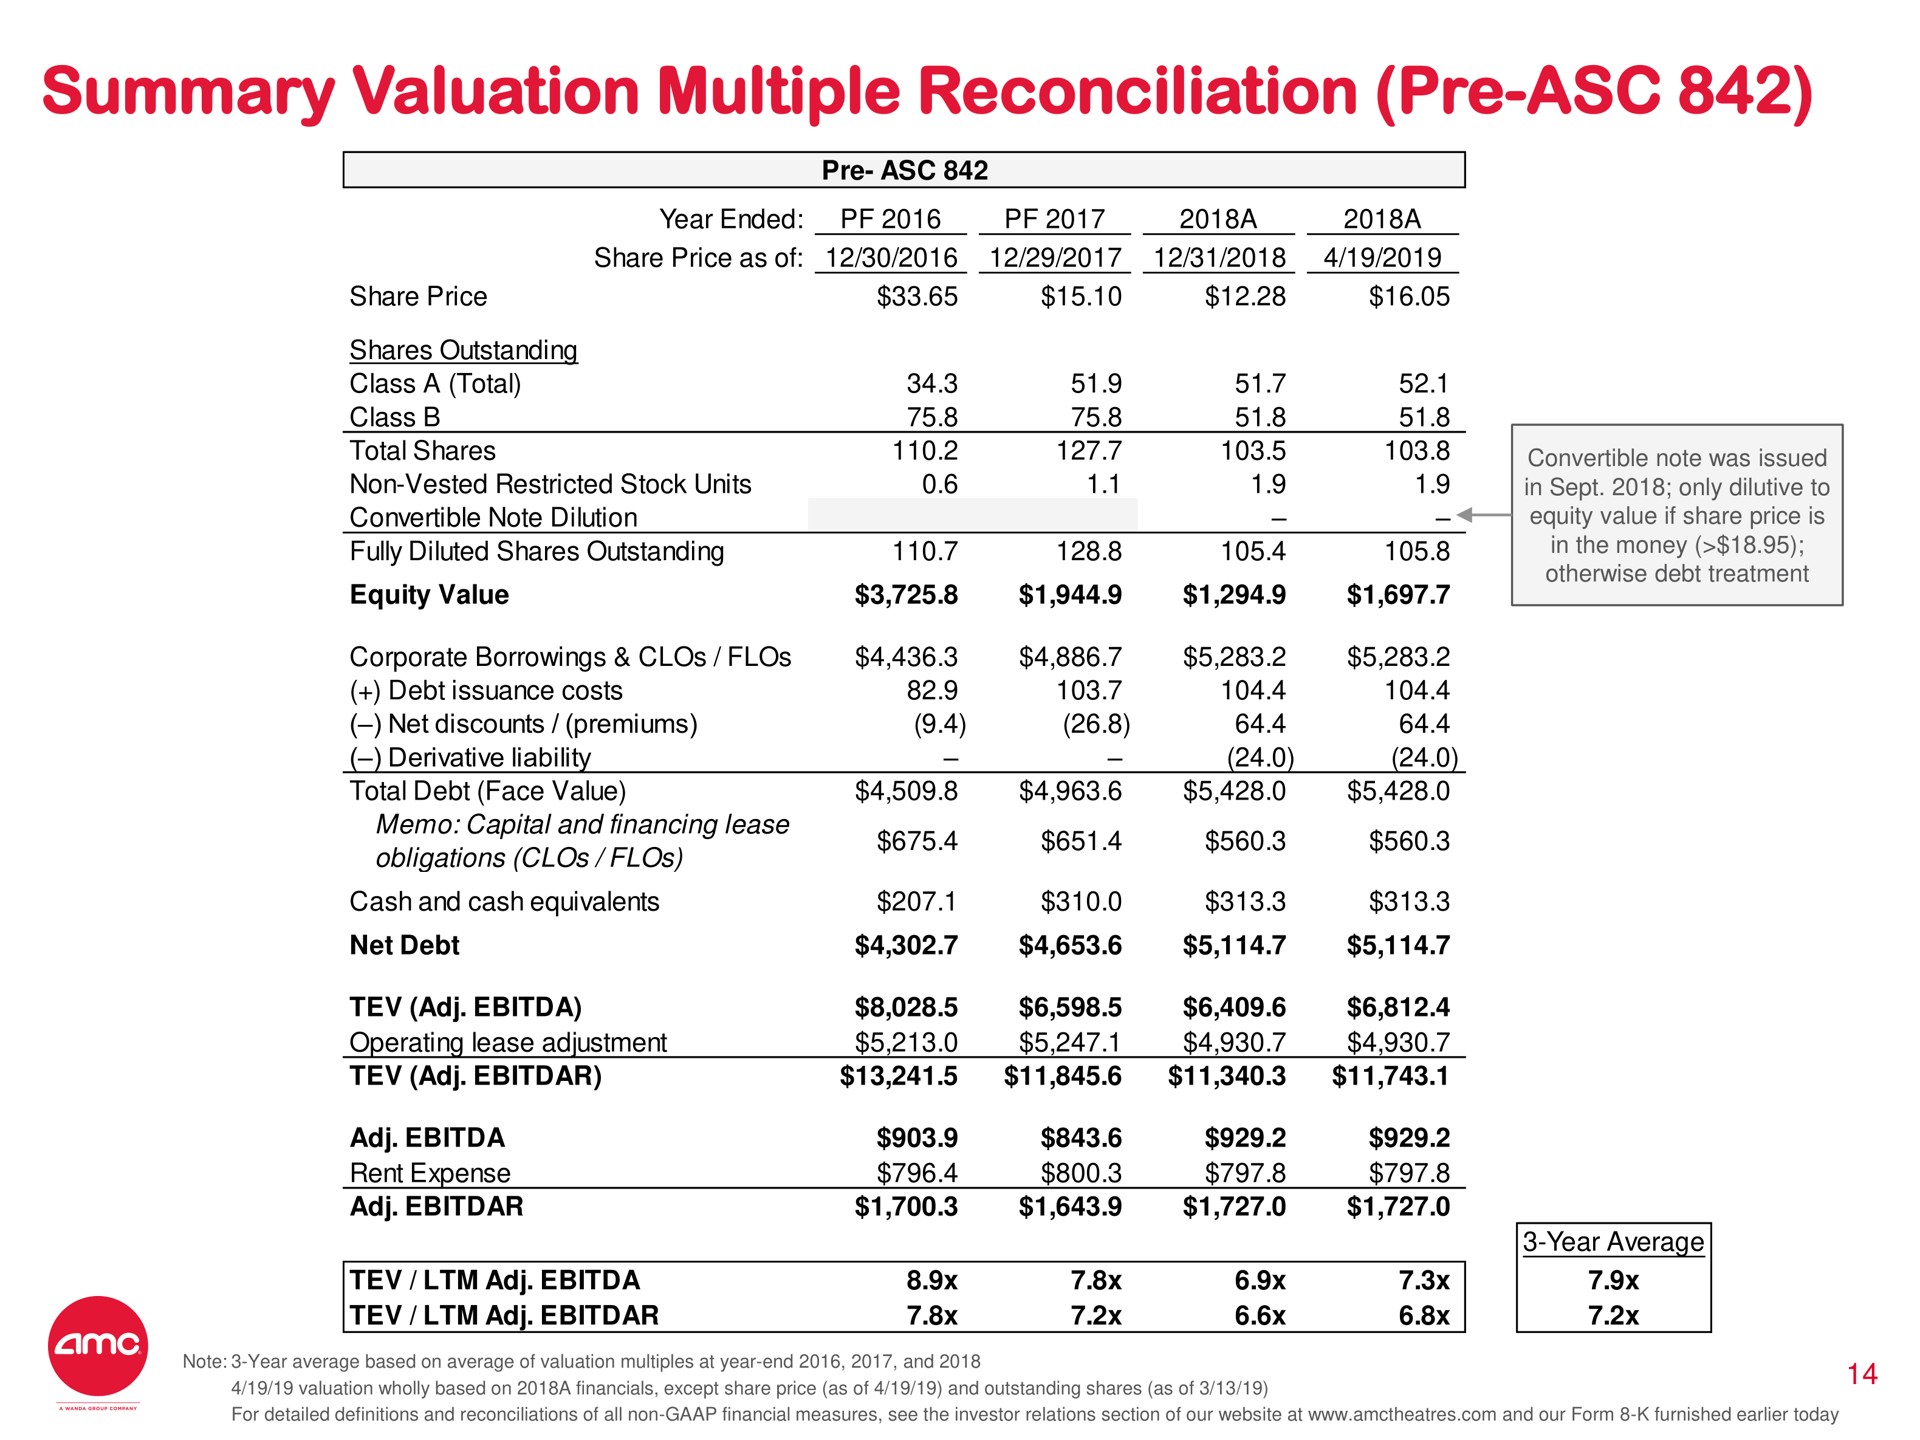 summary valuation multiple reconciliation | AMC